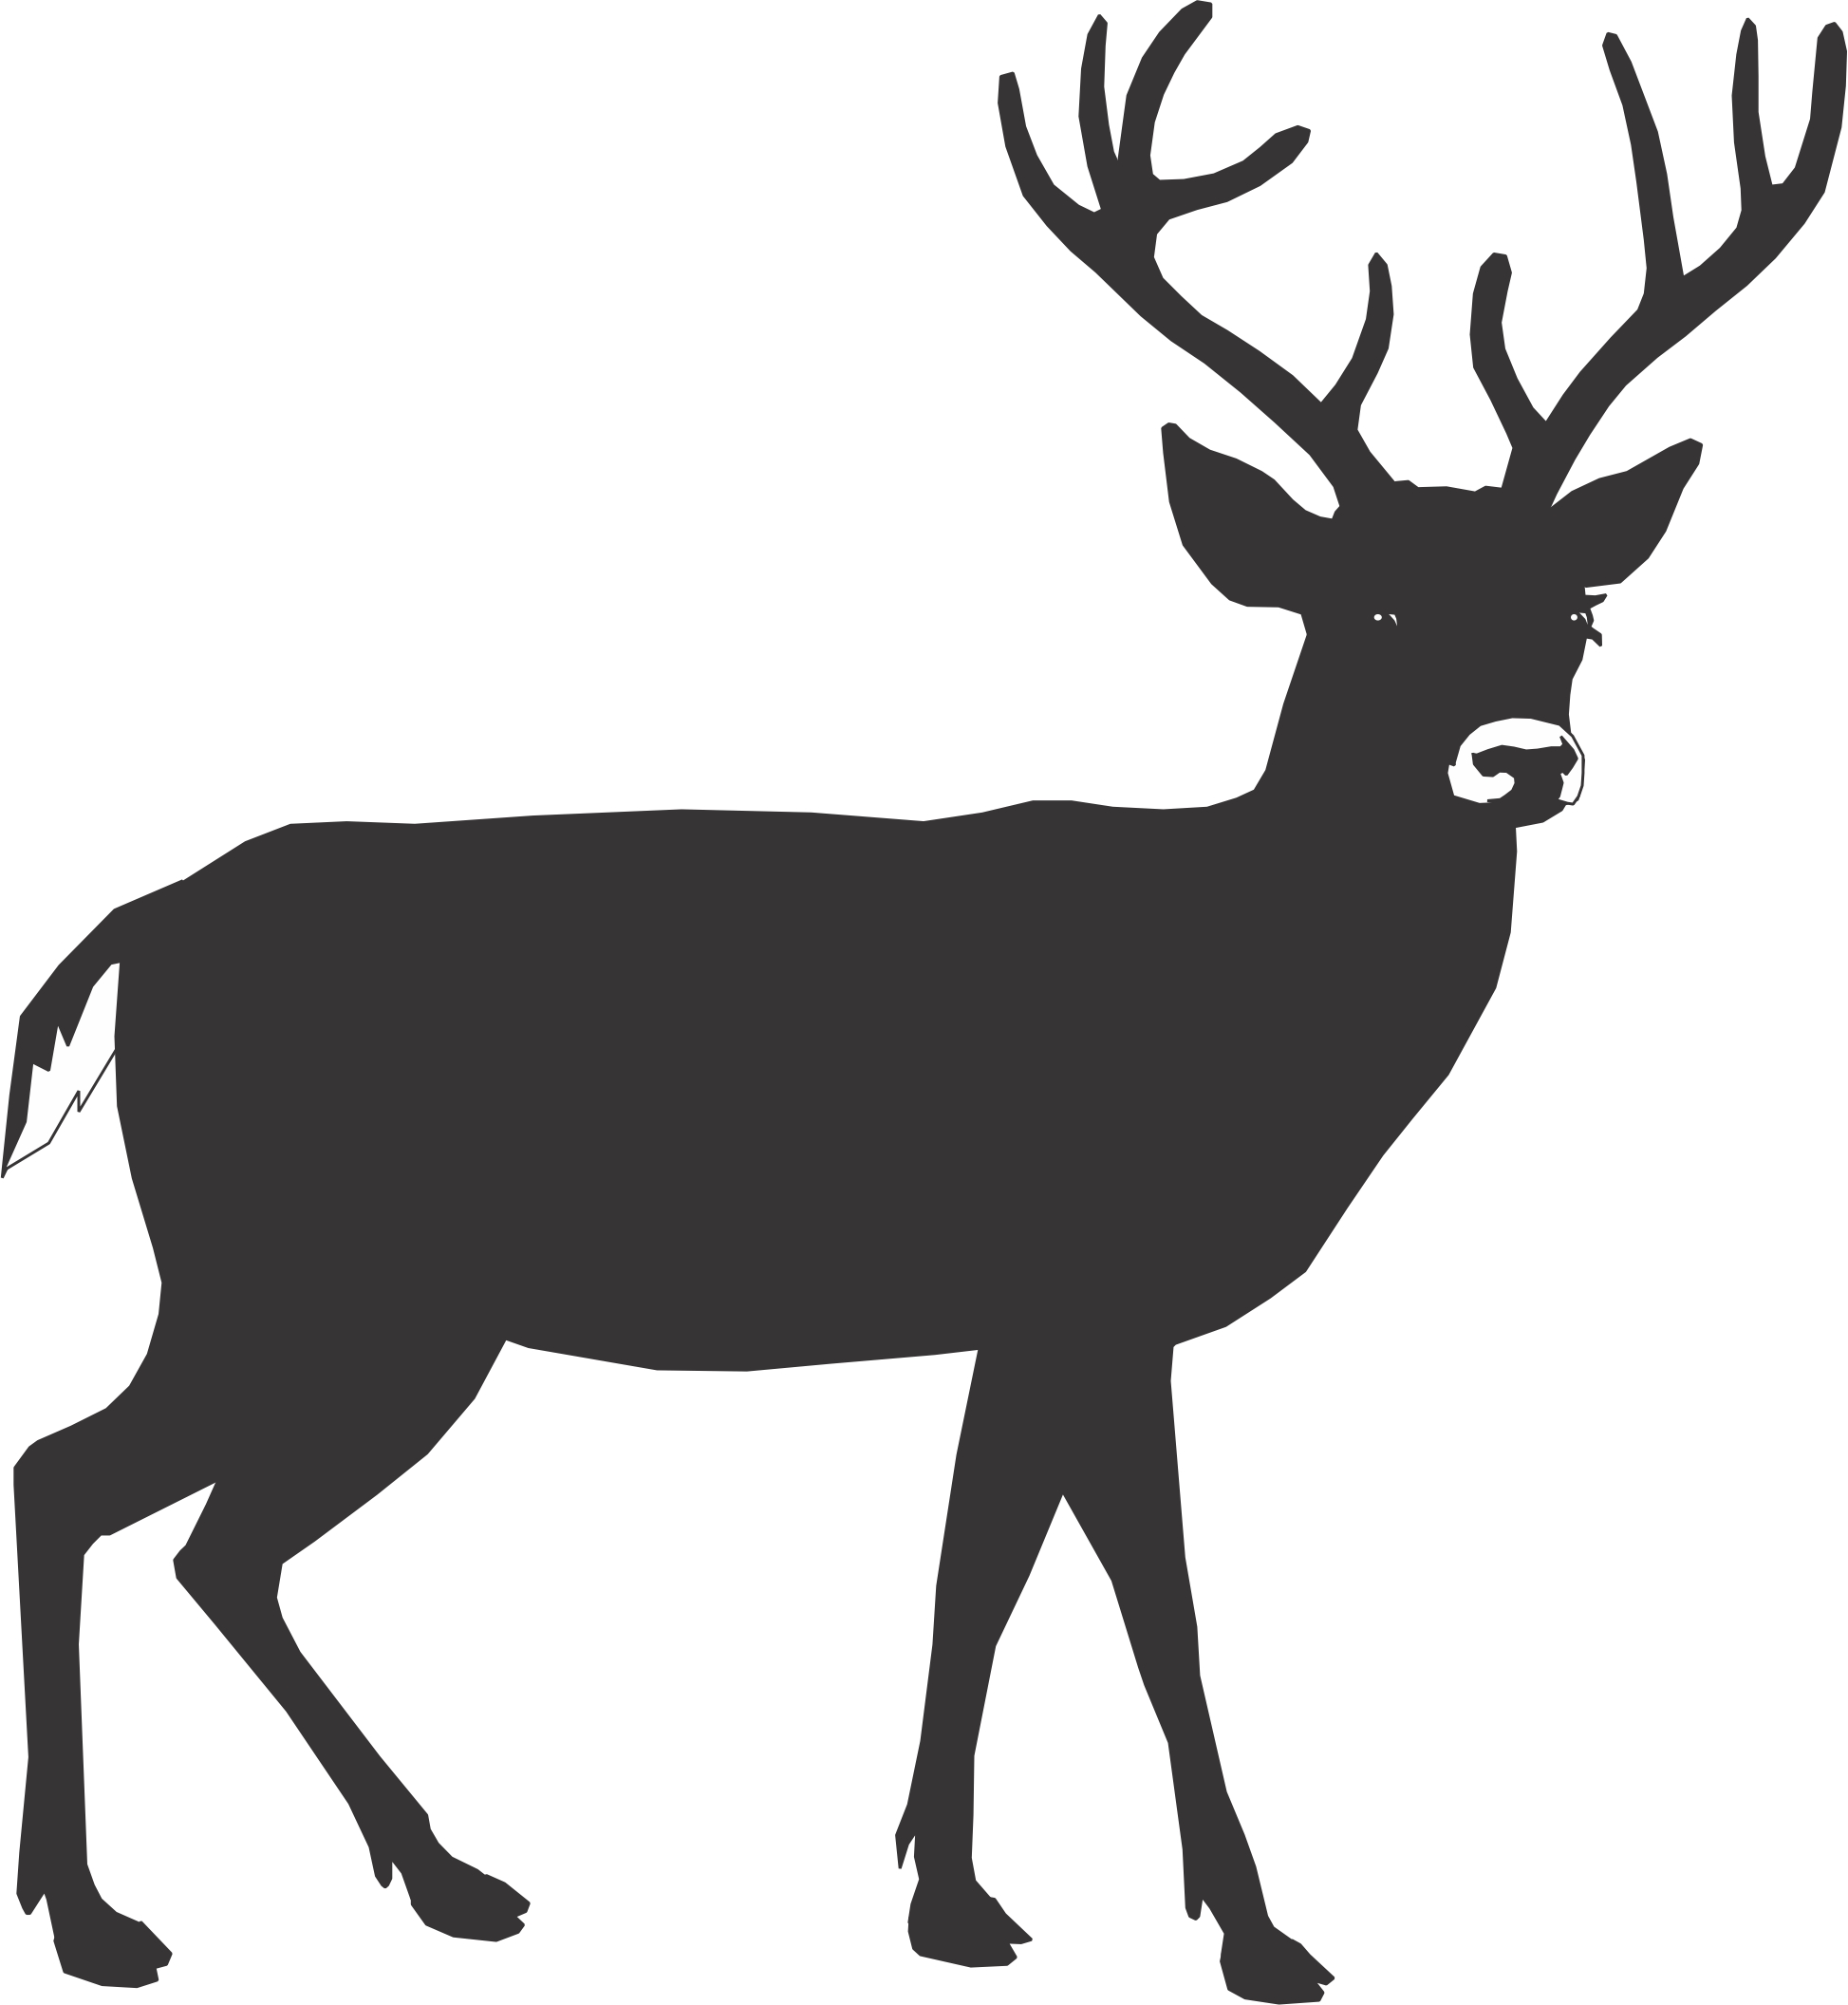 Deer outline clipart